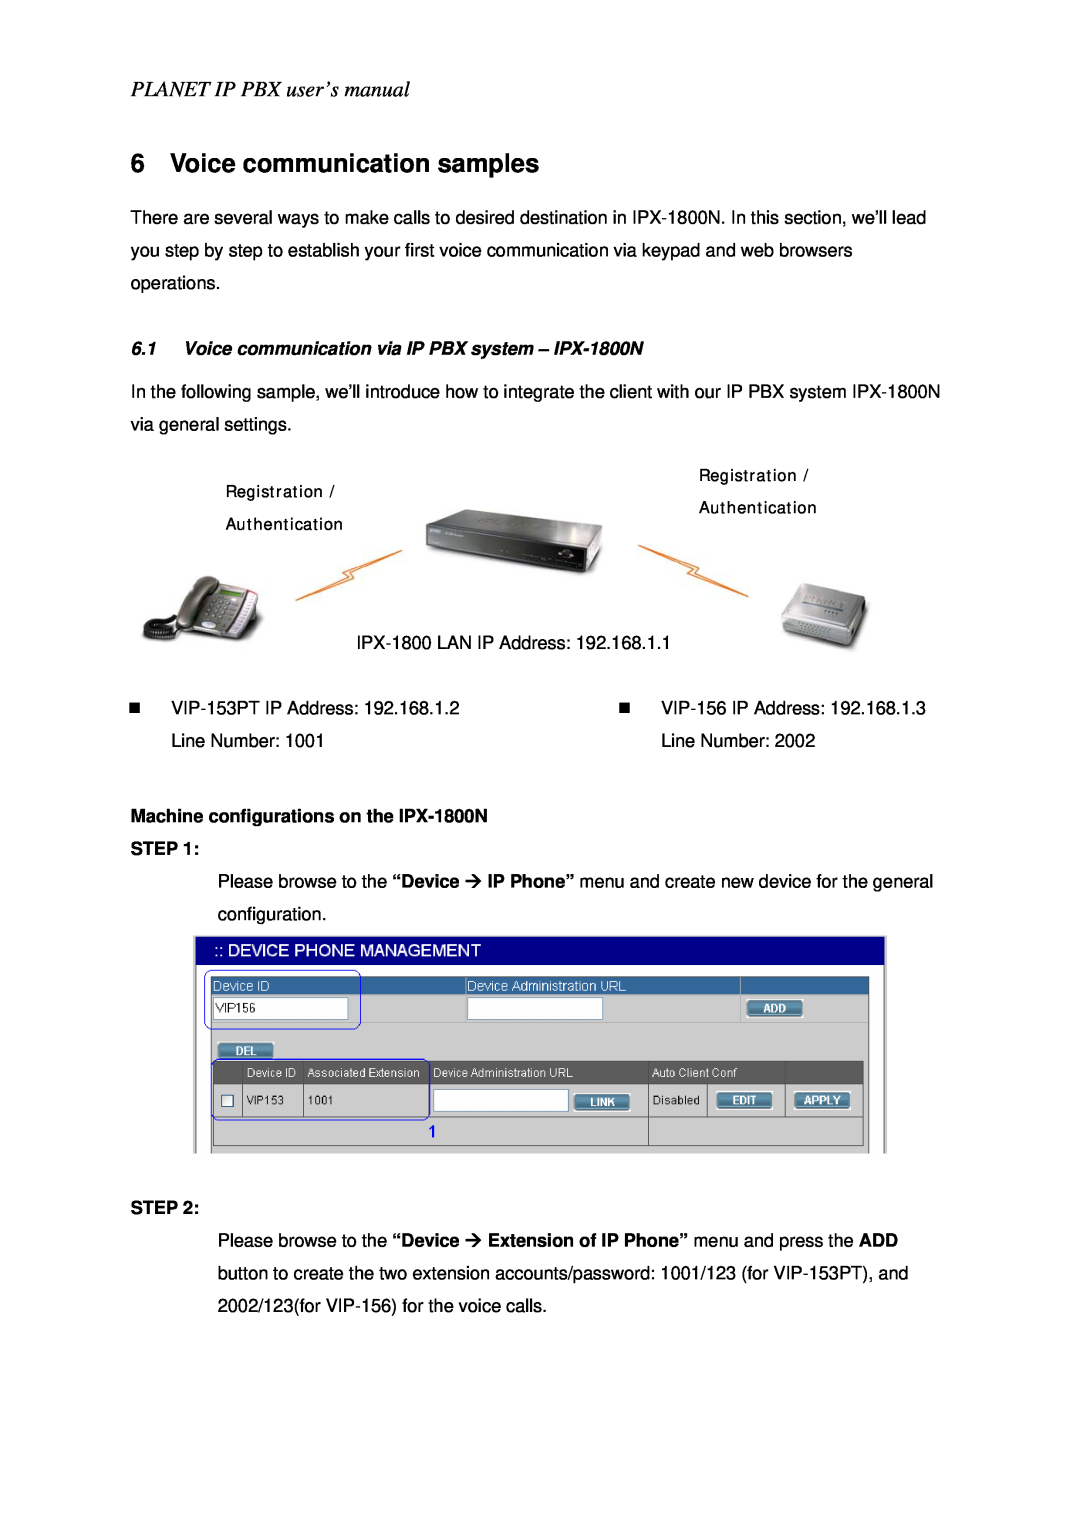 Planet Technology user manual Voice communication samples, Voice communication via IP PBX system - IPX-1800N, Step 